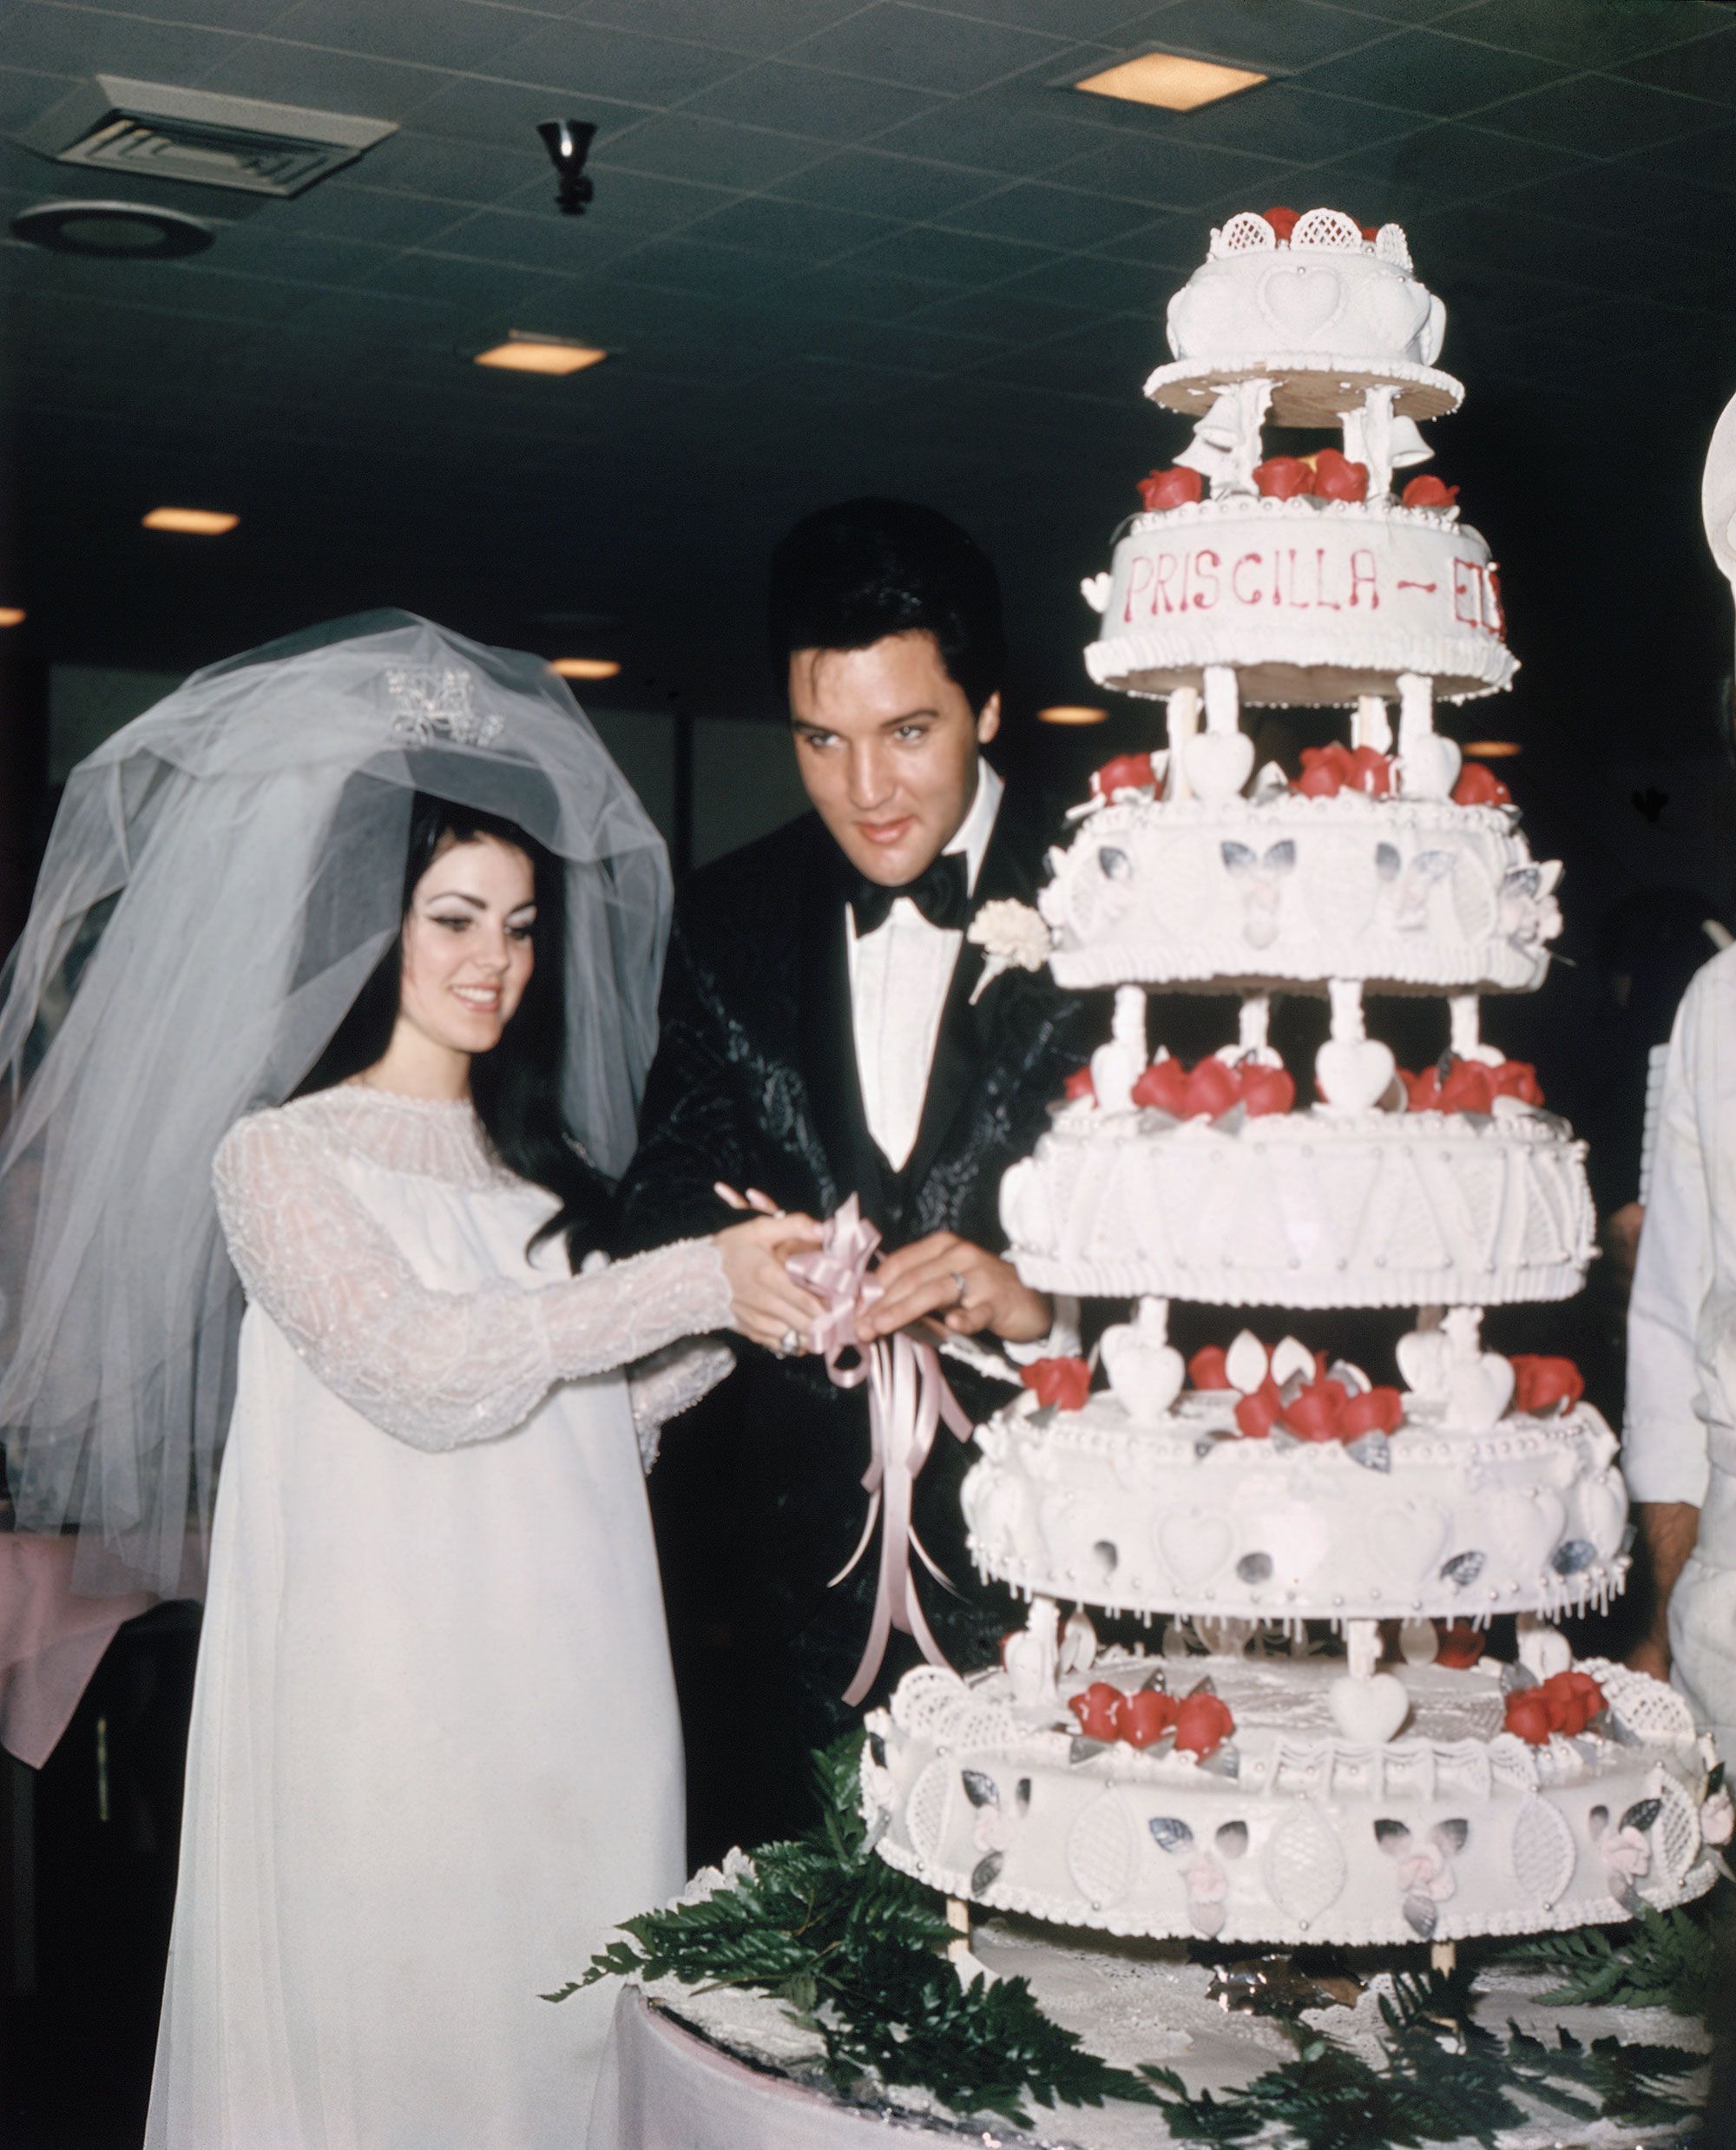 Get the Best Wedding Cakes & Wedding Cake Designs